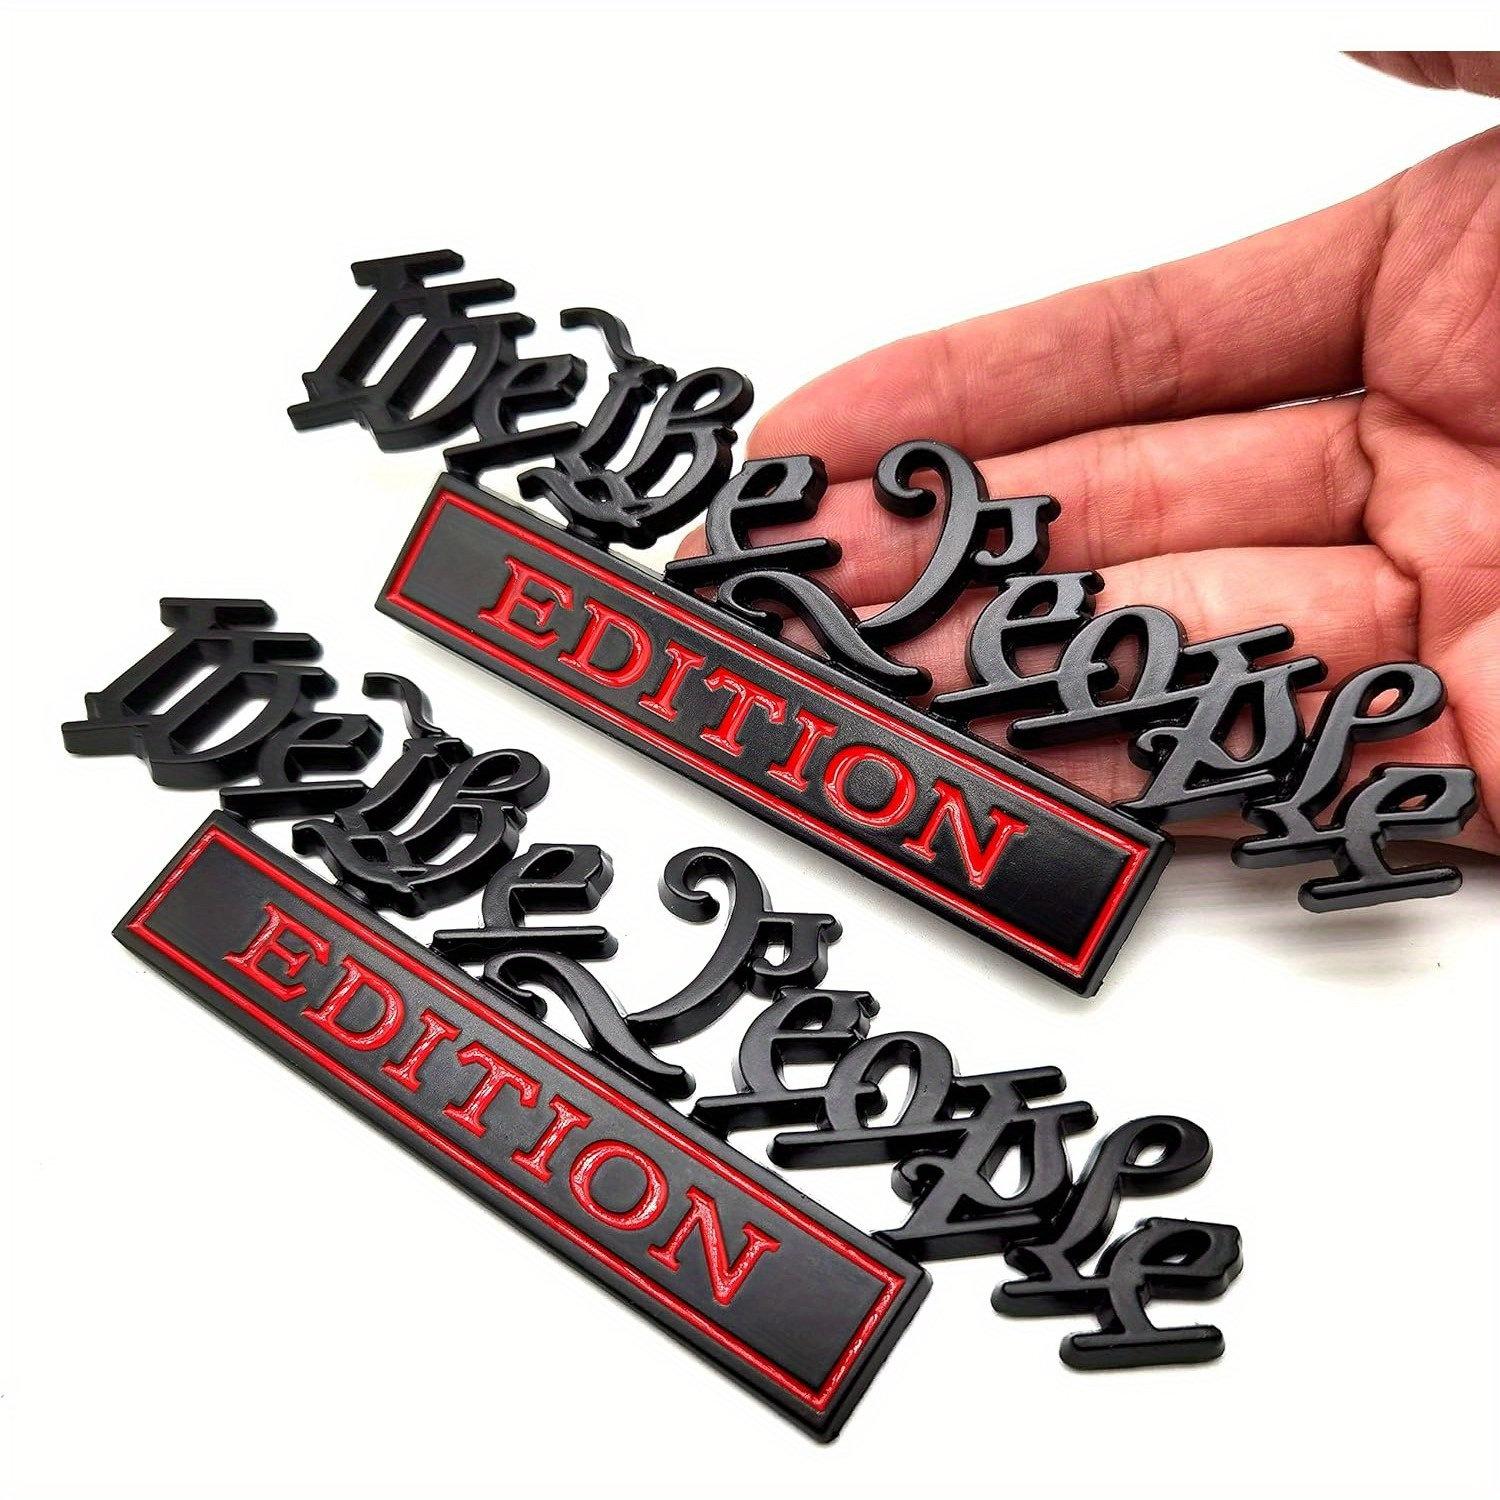 

We The People Edition 3d Full Metal Car Emblems Decals Labels Car Decoration - 2pcs